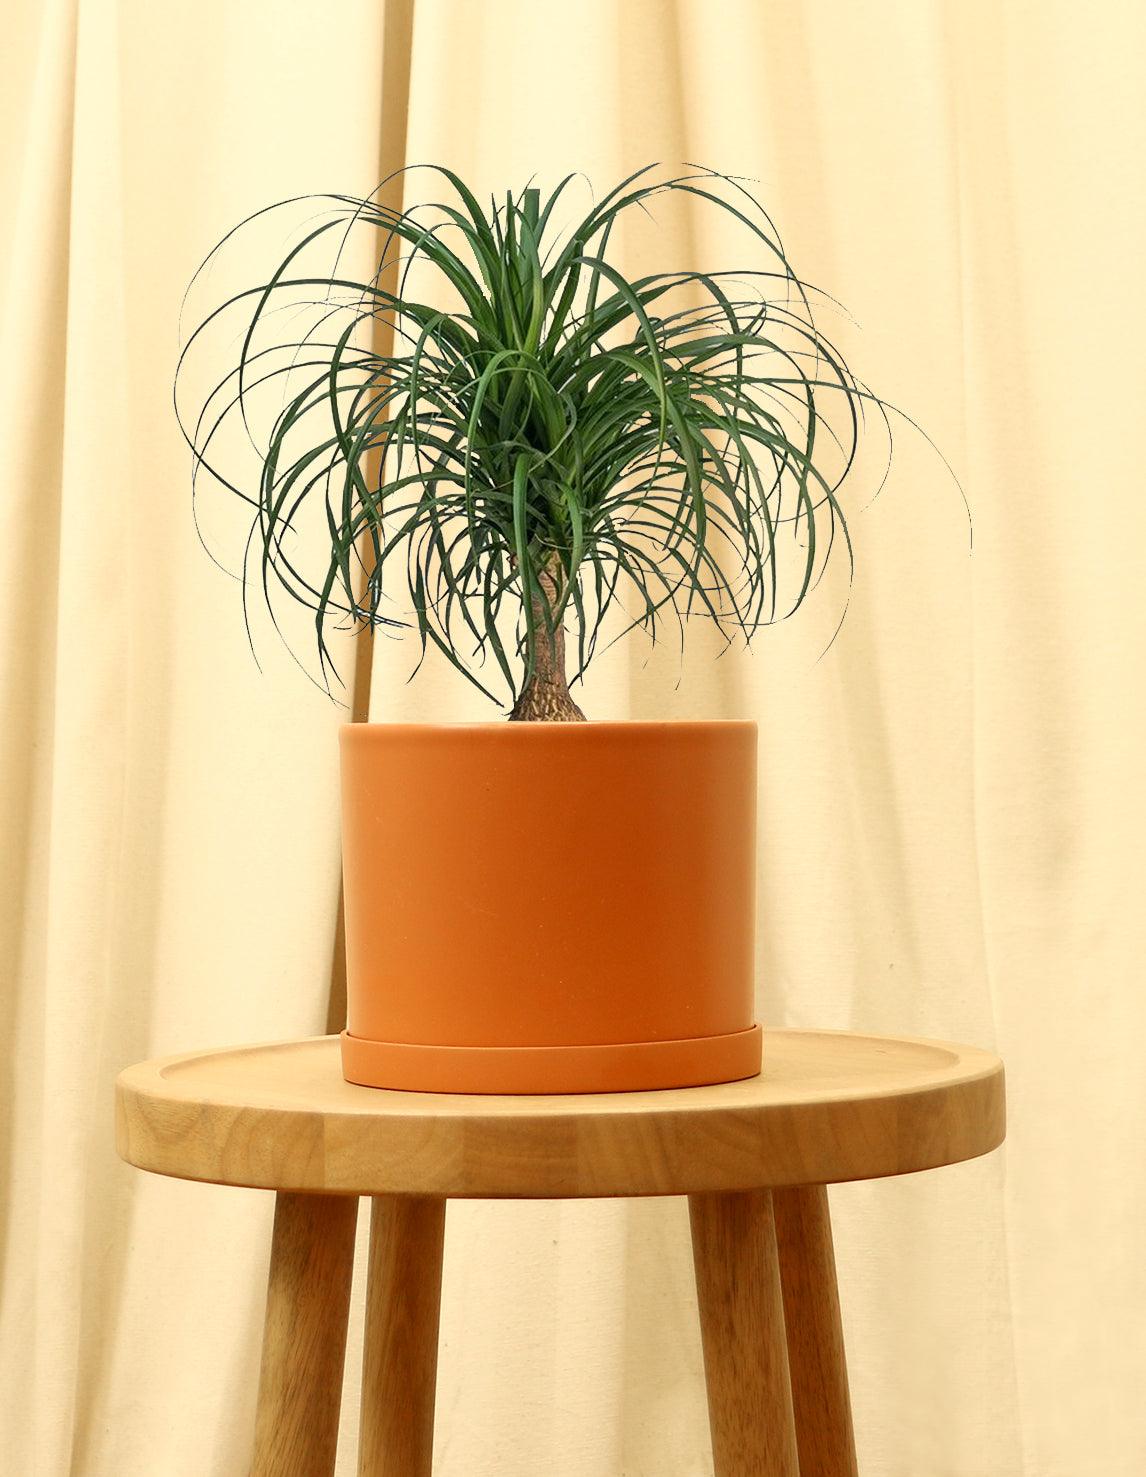 Medium Ponytail Palm Plant in orange pot.